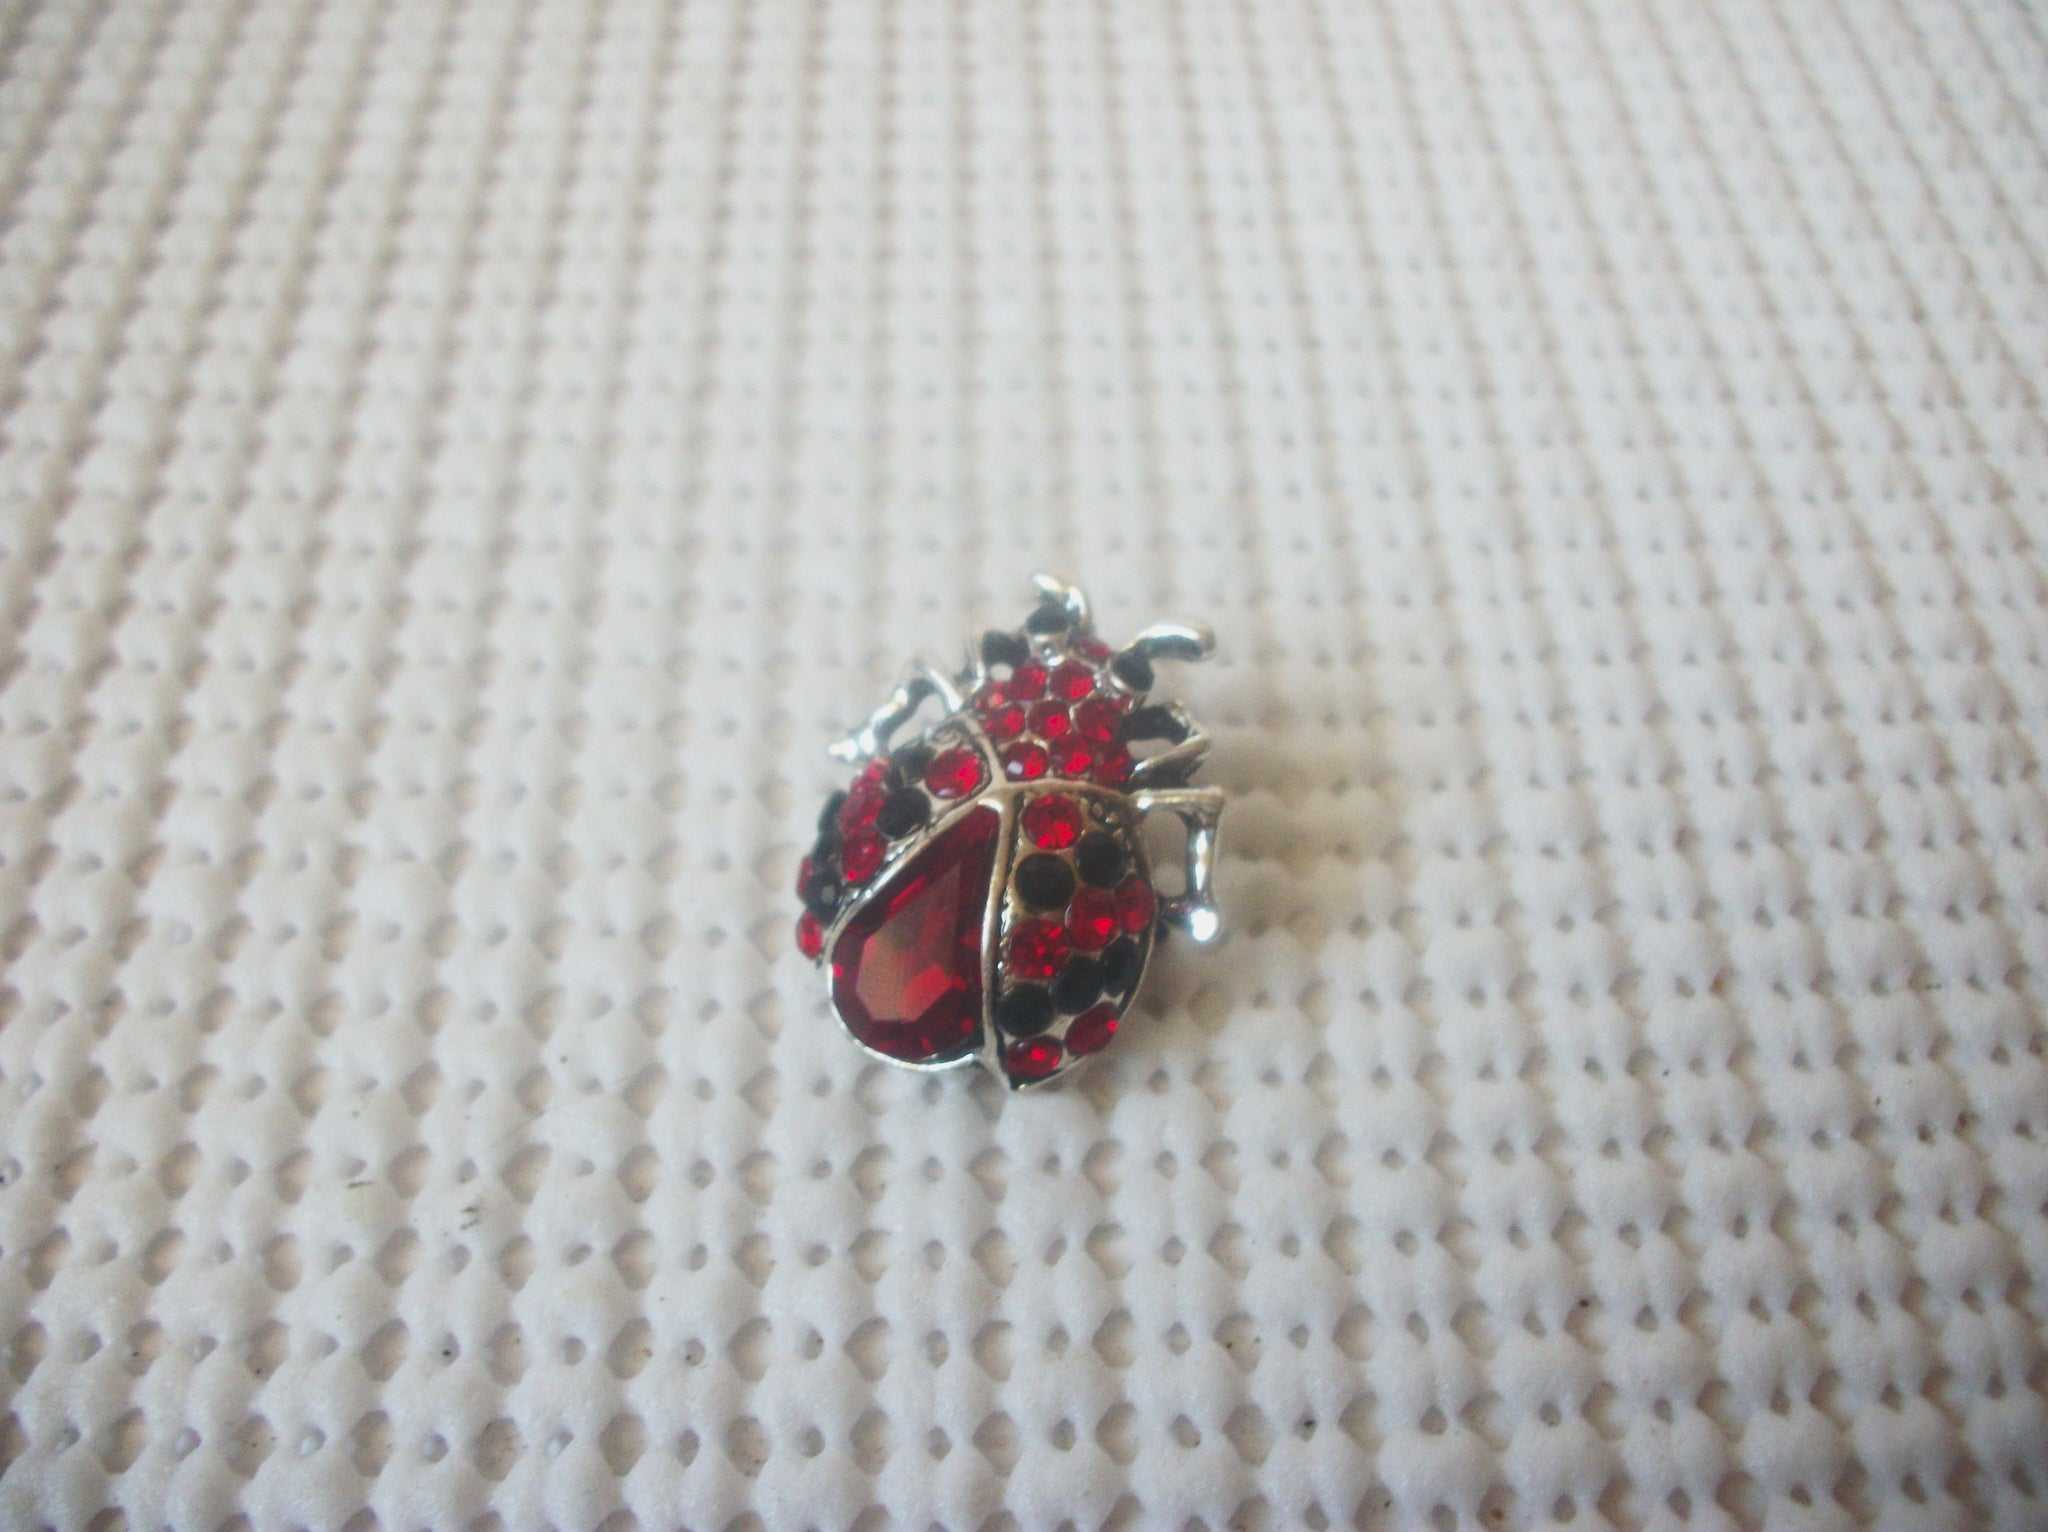 Smaller Vintage Brooch Pin, Ladybug Red Black  Glass Rhinestones, Silver Tone 023021